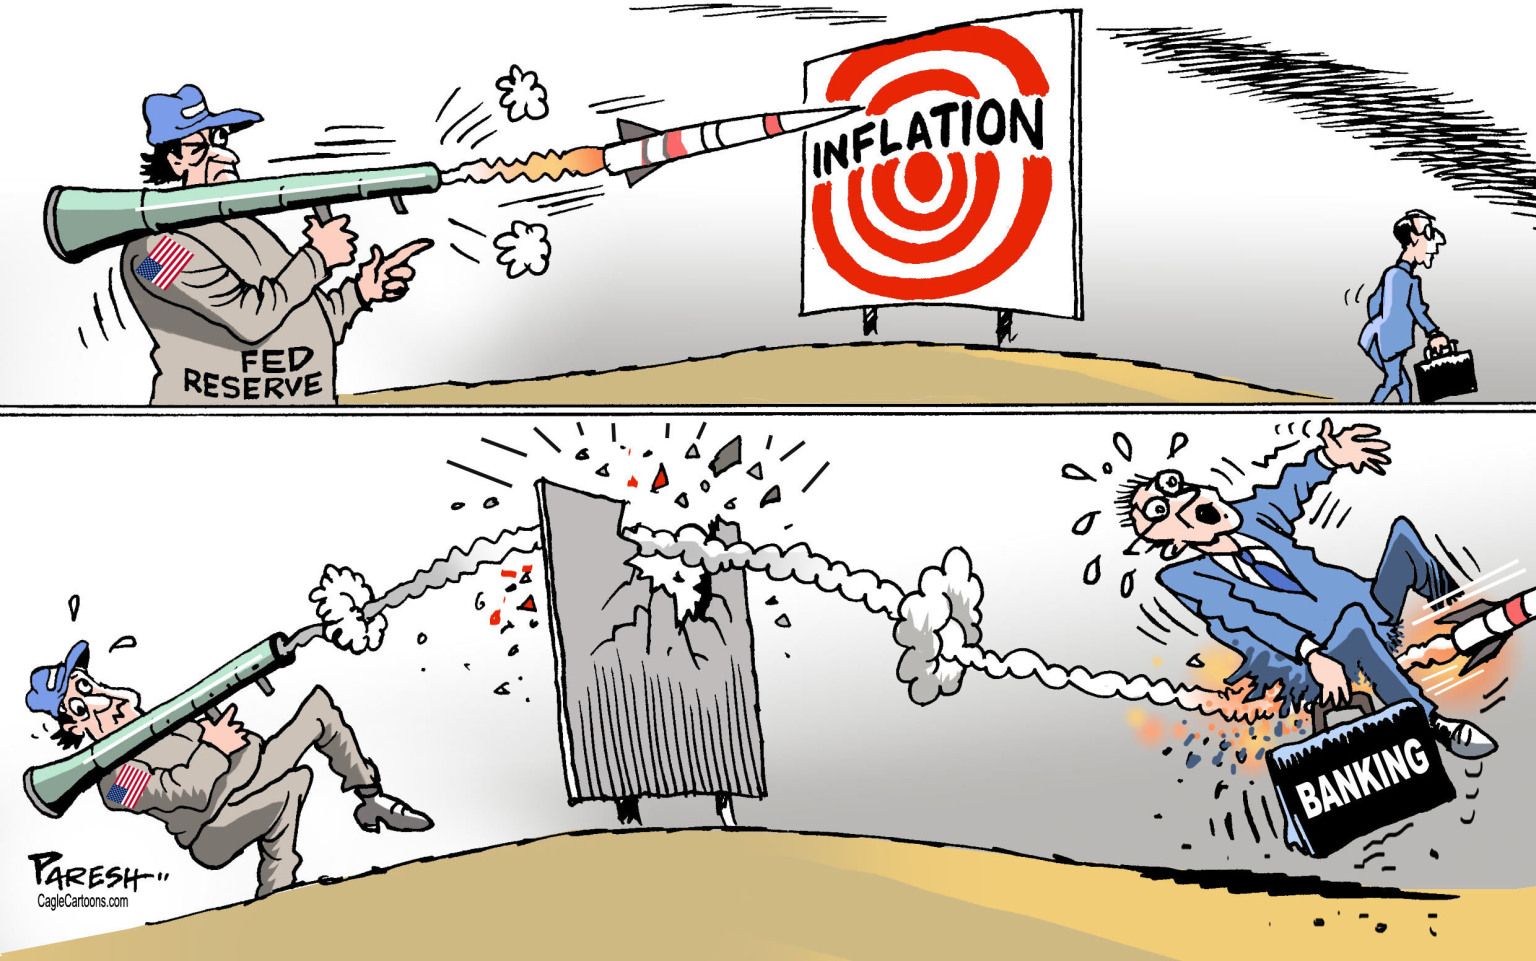 newsjustin.press - US inflation and banking - editorial political cartoon